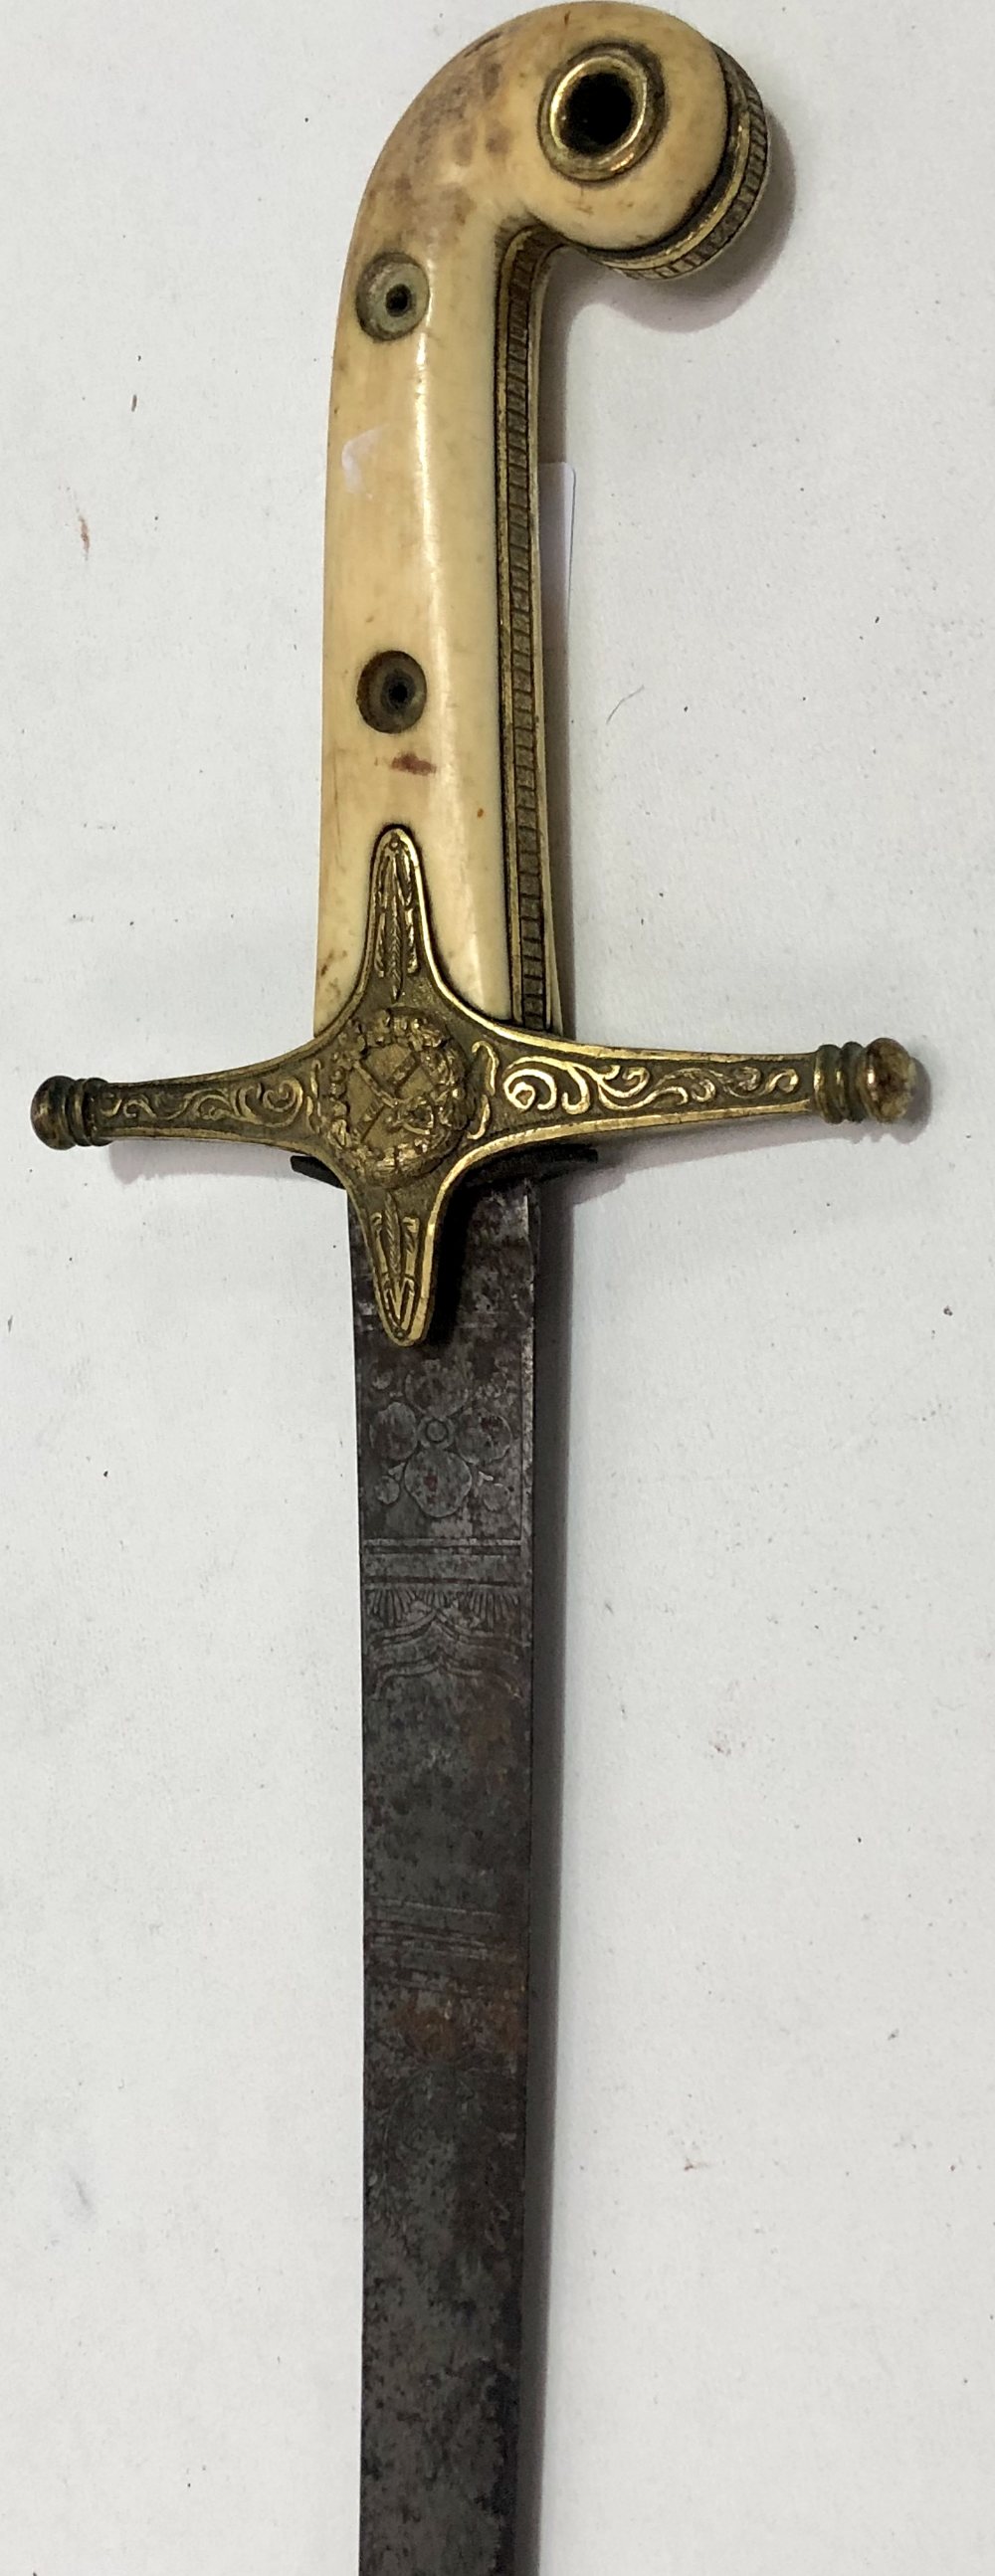 19th Century ivory handled Mameluke sword with etched blade & VR monogram, length 89cm - Image 2 of 4